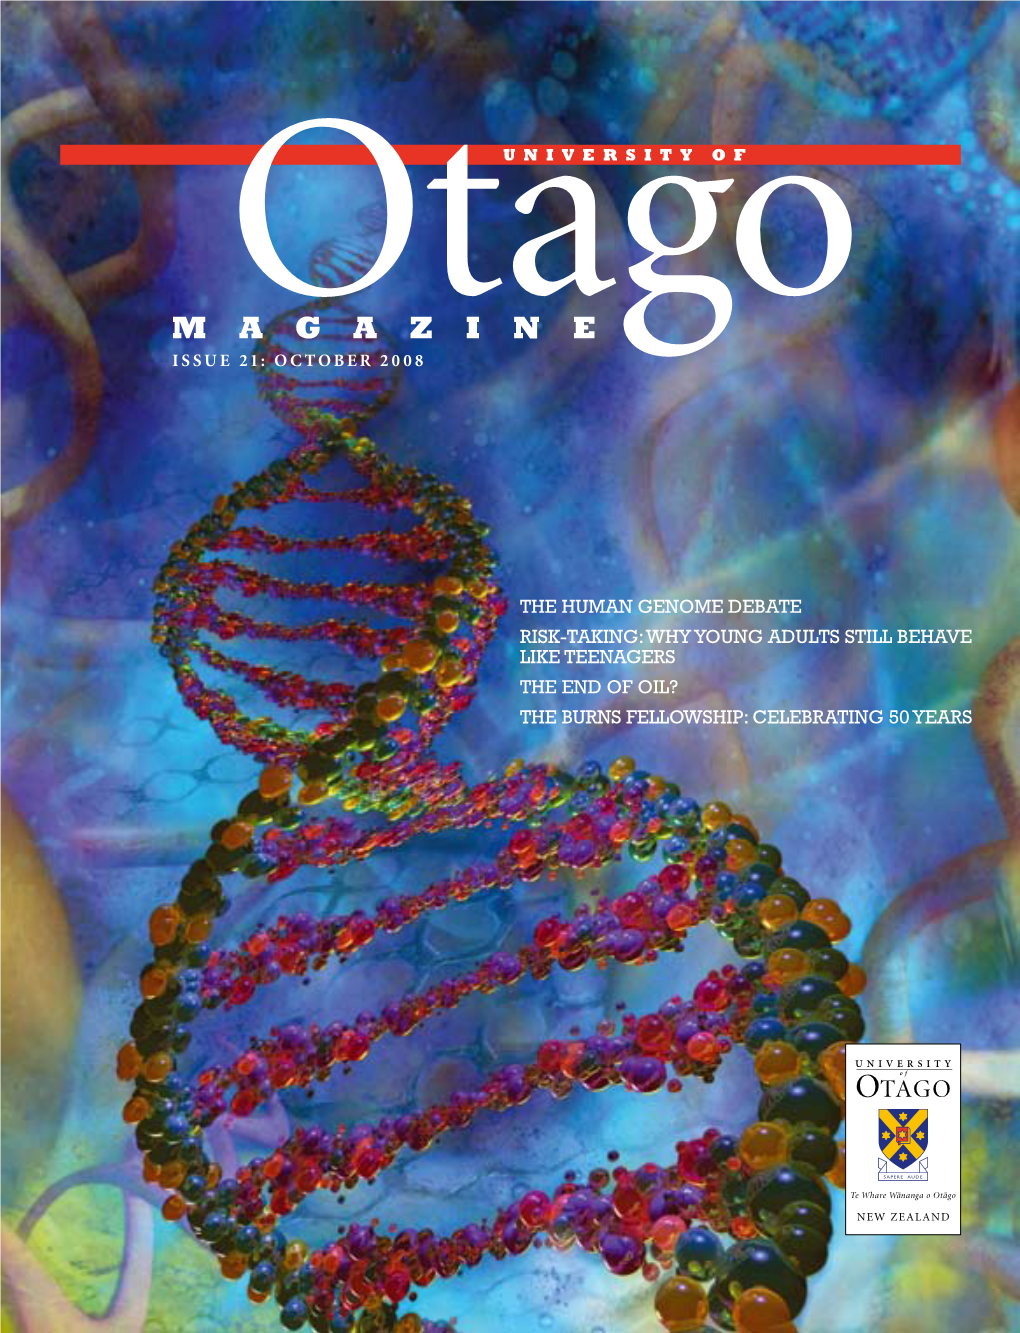 Issue 21 of the University of Otago Magazine